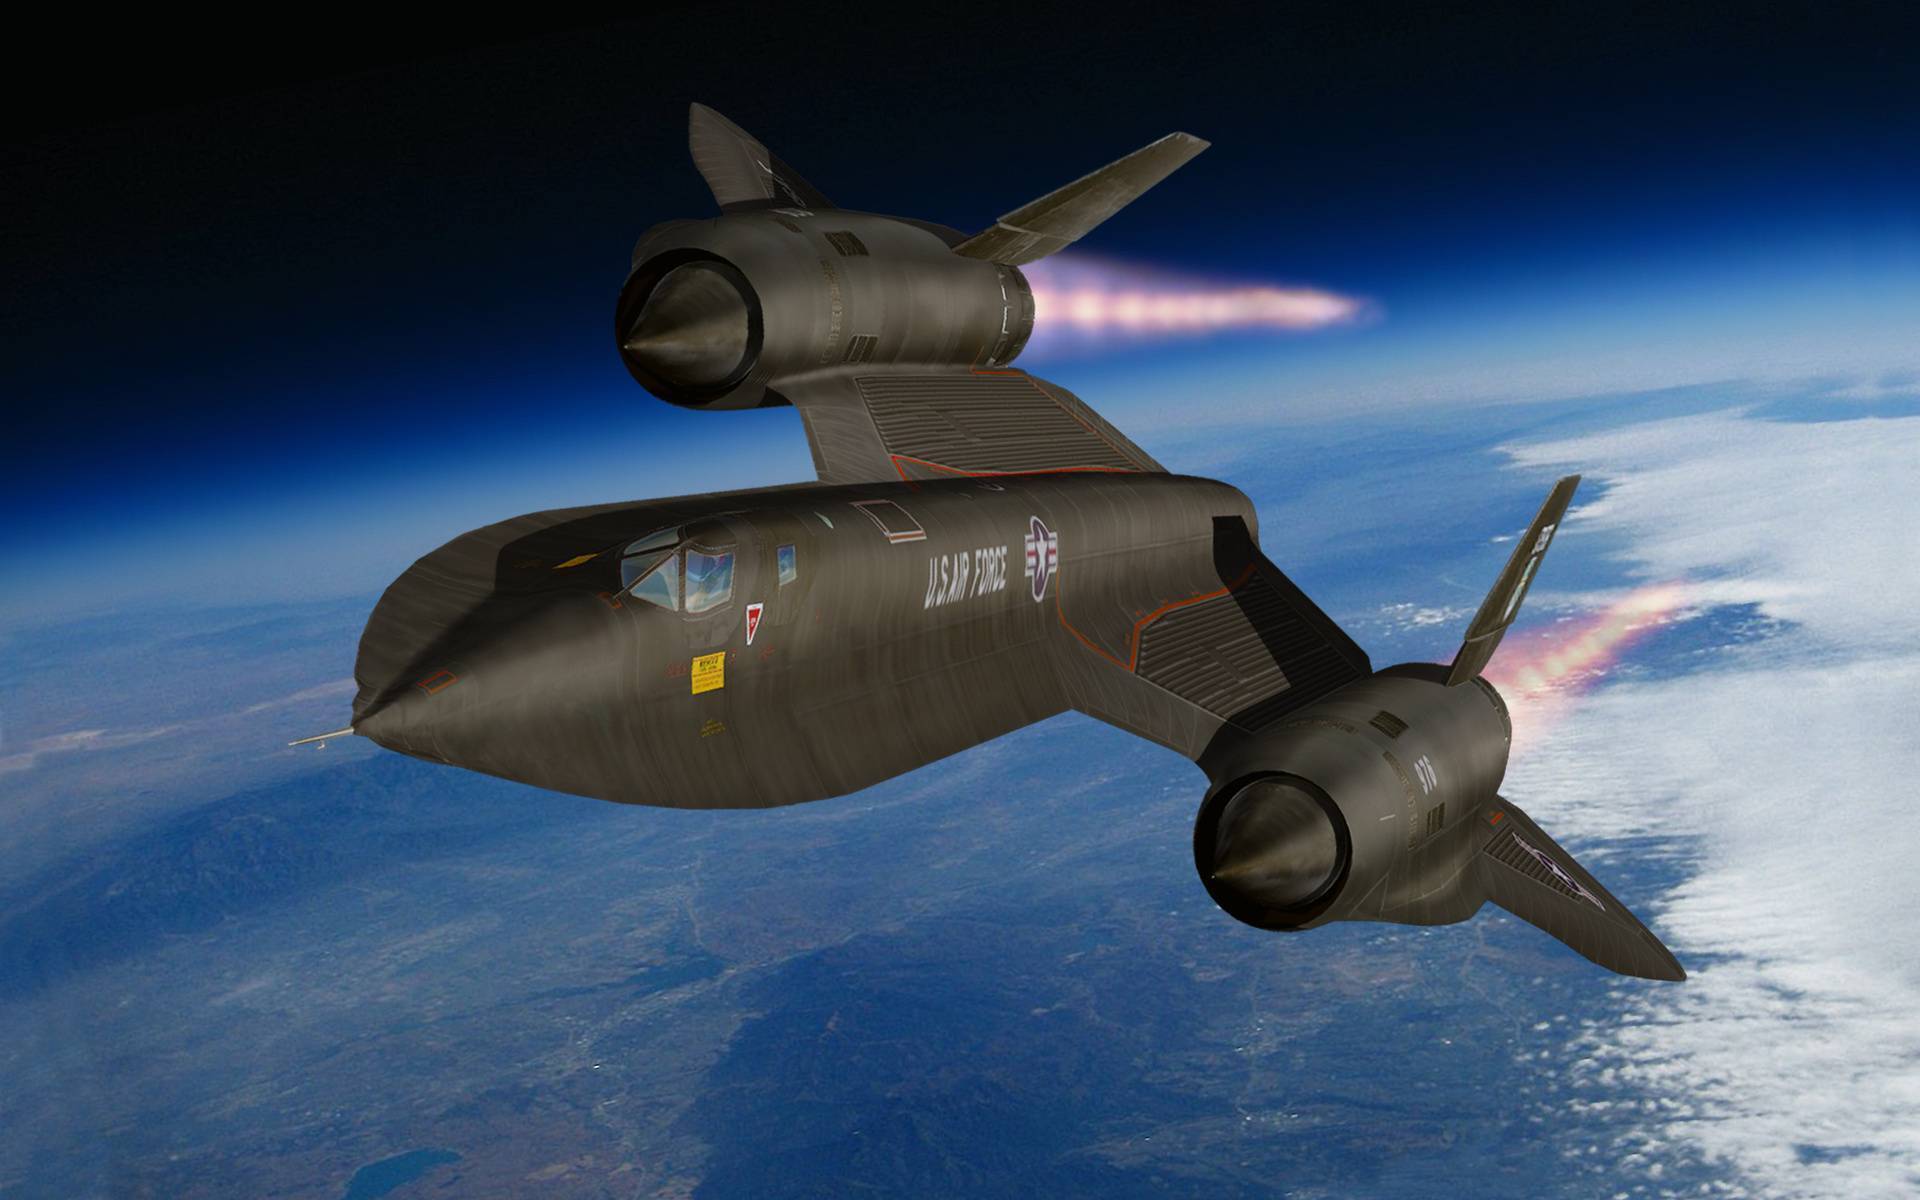 Lockheed sr-71 blackbird — википедия переиздание // wiki 2